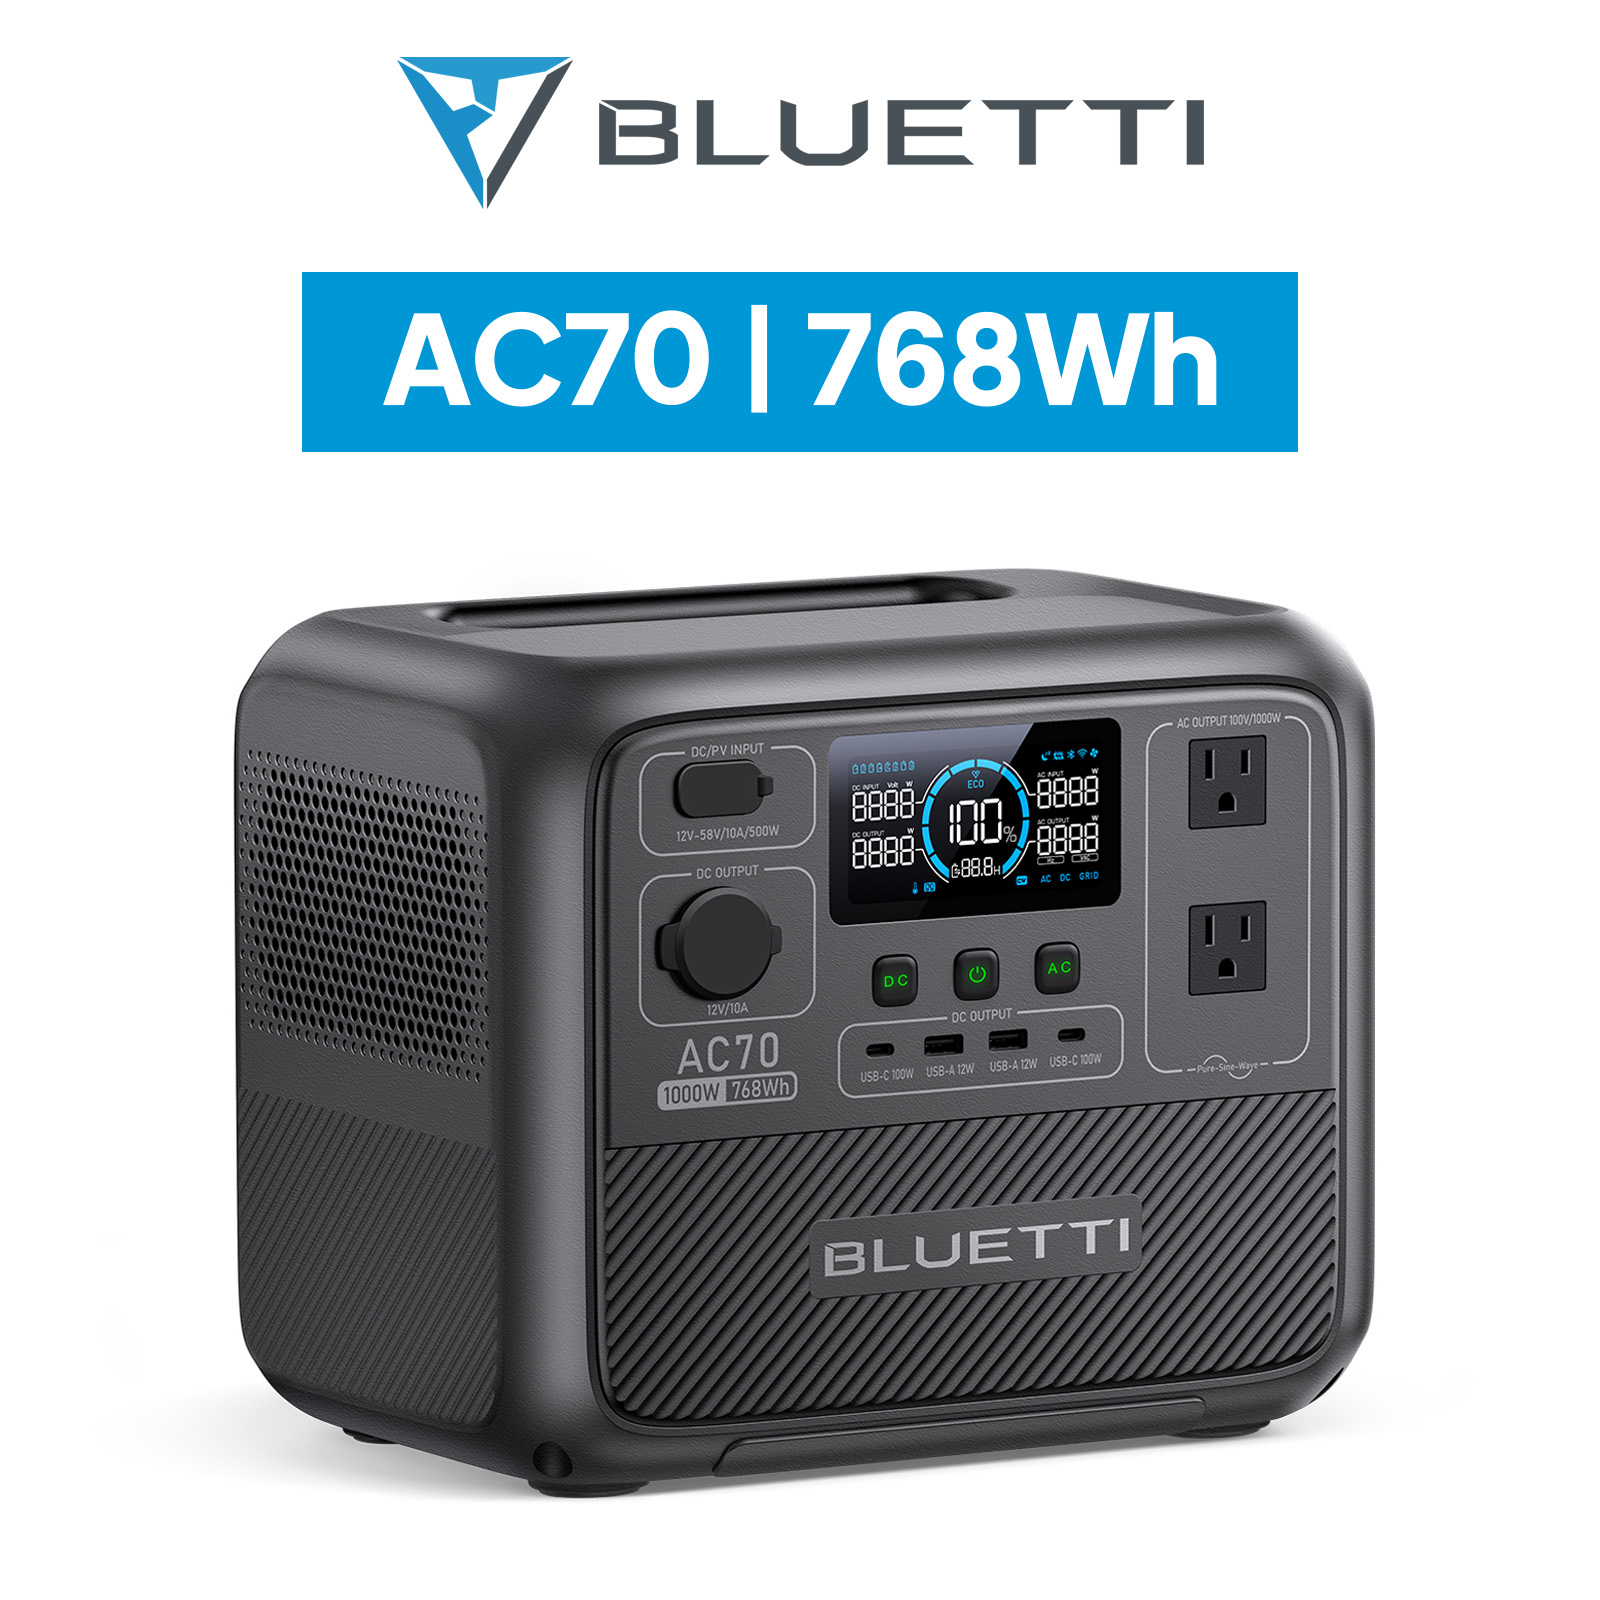 BLUETTI ポータブル電源 AC70 768Wh/1000W 大容量 家庭用 蓄電池 5年保証 バックアップ電源(サージ2000W) UPS機能 アプリ対応 アウトドア 防災 節電